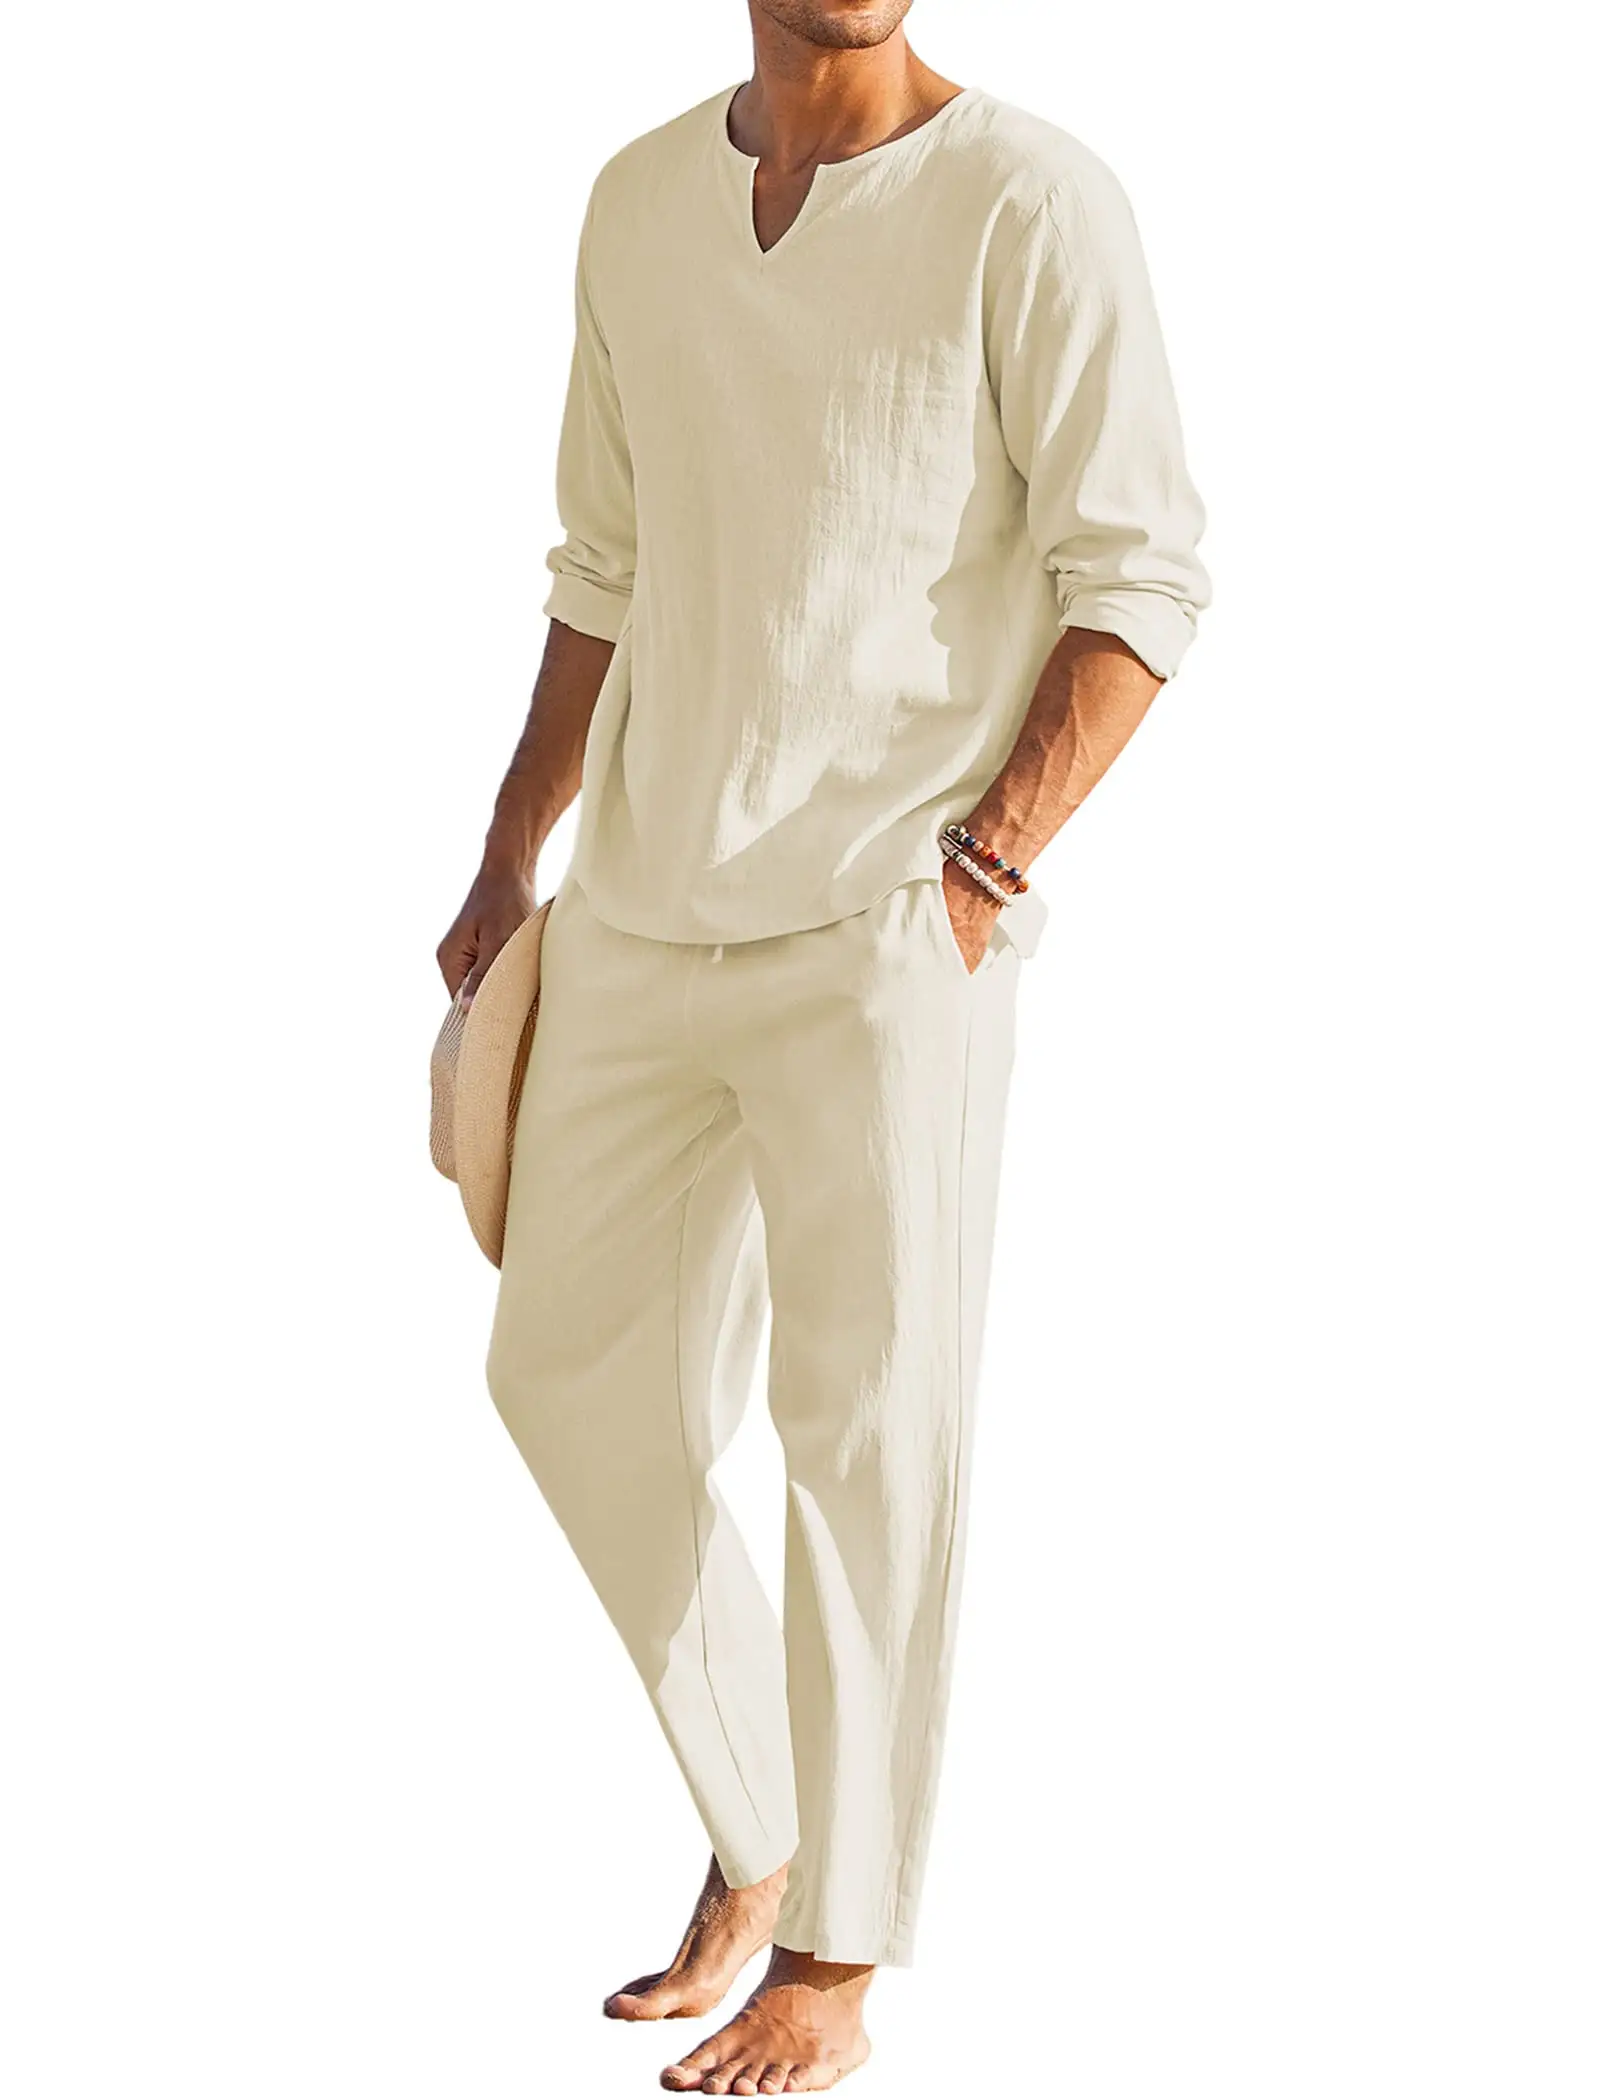 Men's 2 Pieces Cotton Linen Set Henley Shirt Long Sleeve and Casual Beach Pants Summer Yoga Outfits